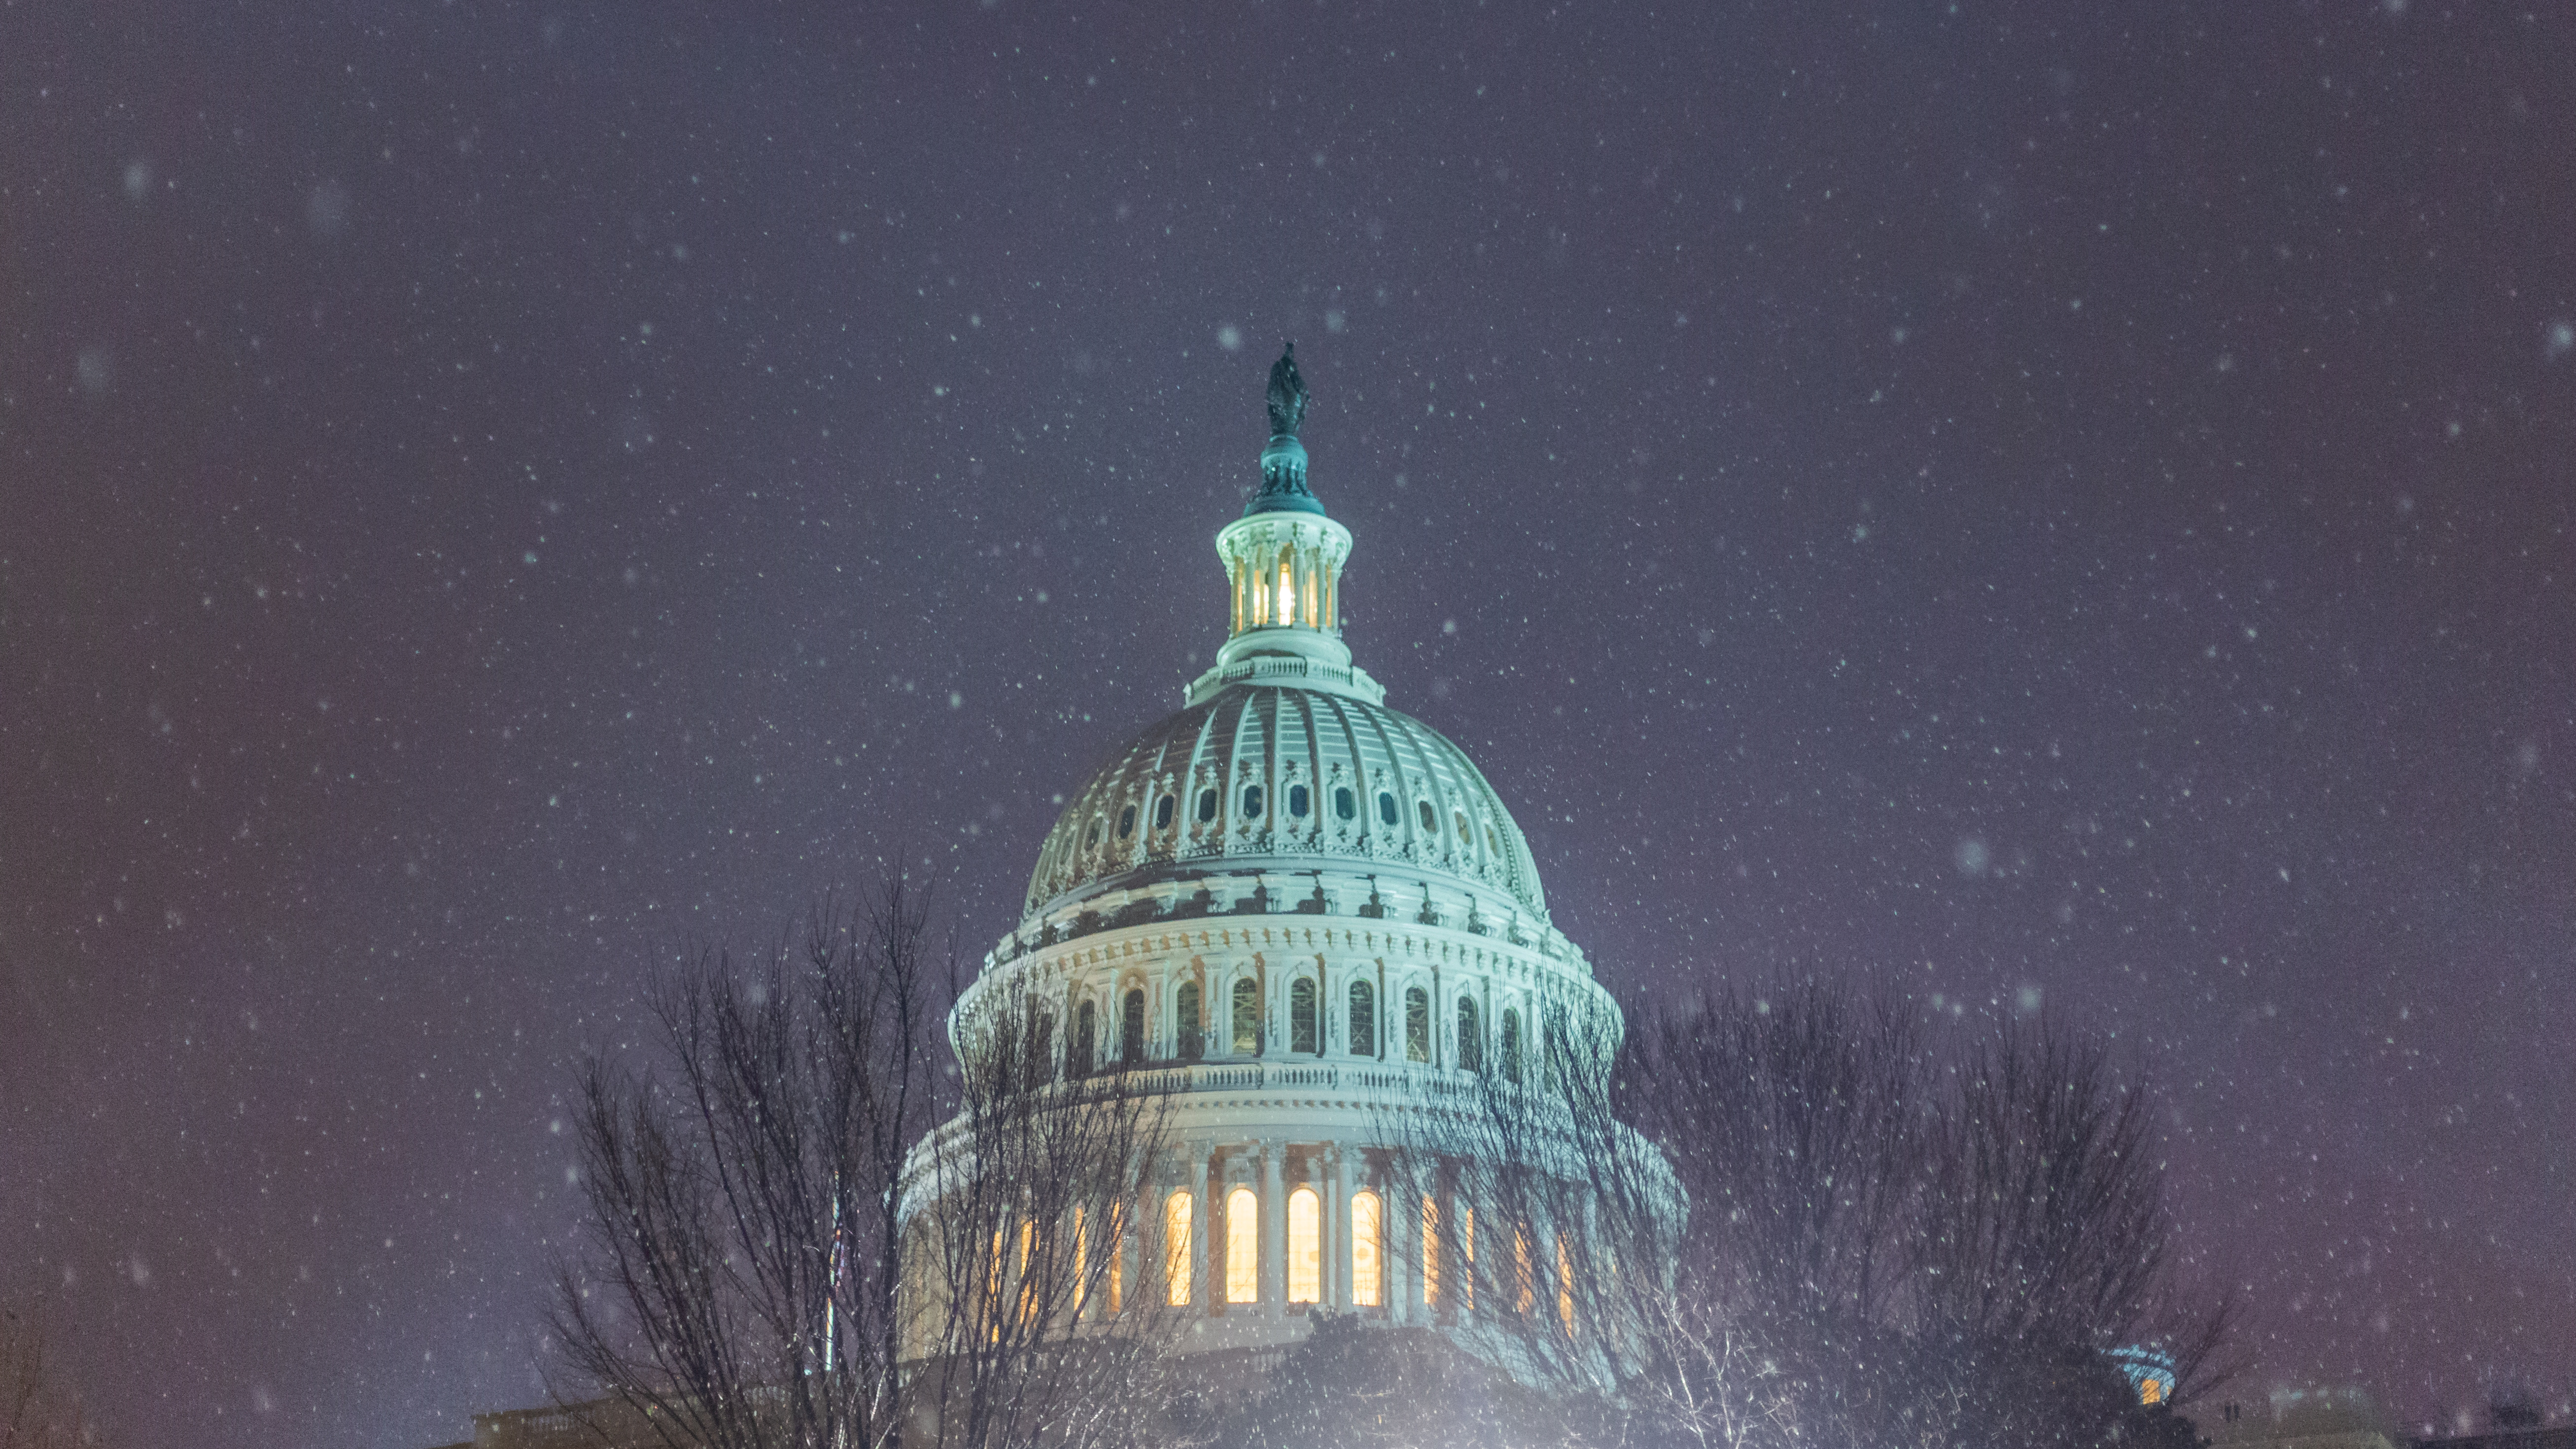 Capitol Dome in Winter